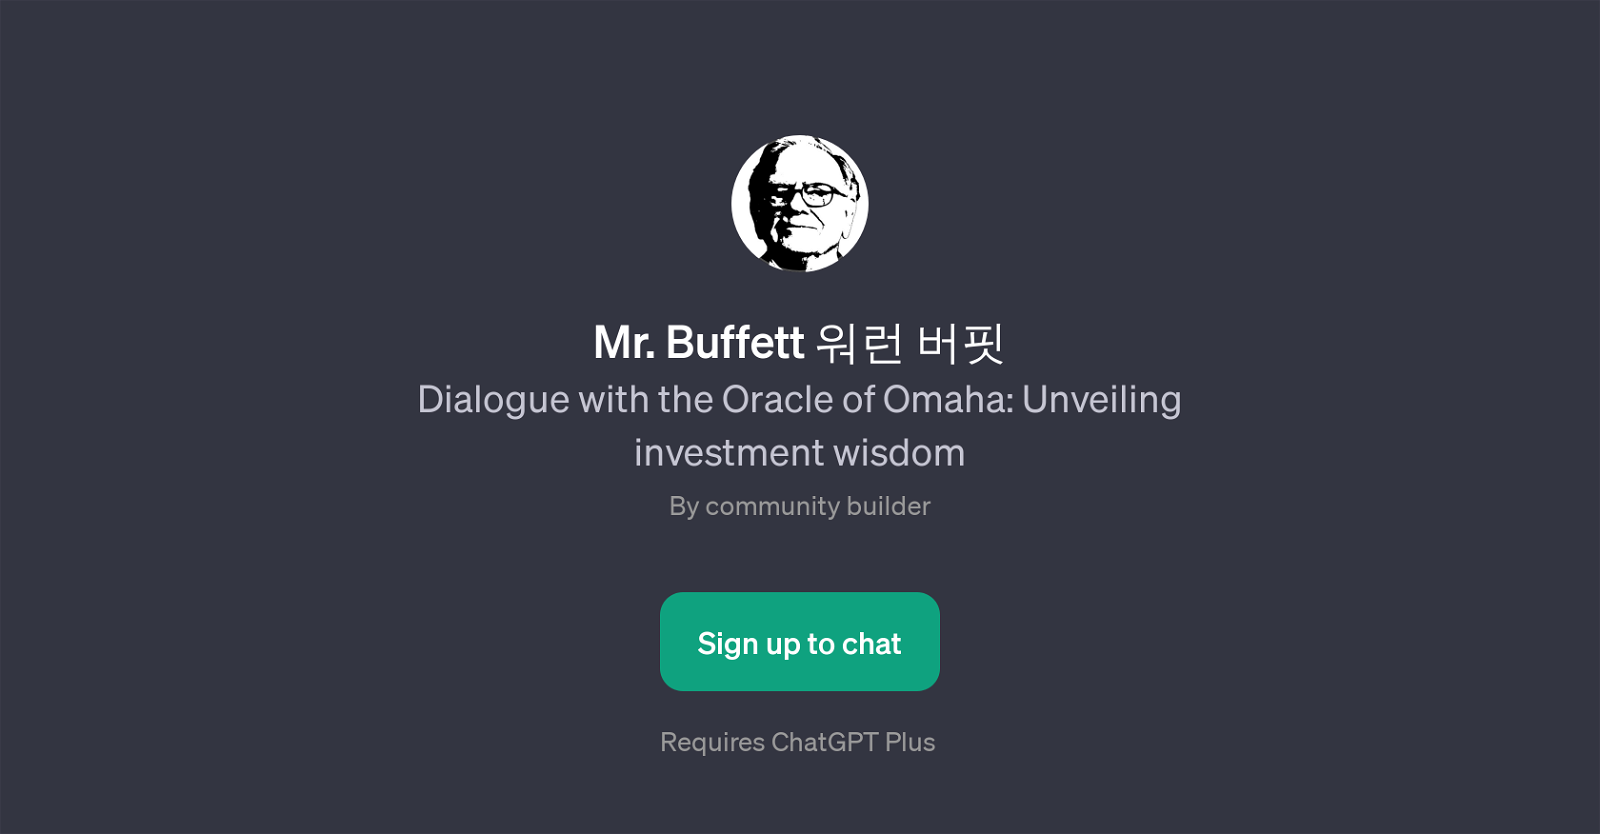 Mr. Buffett website